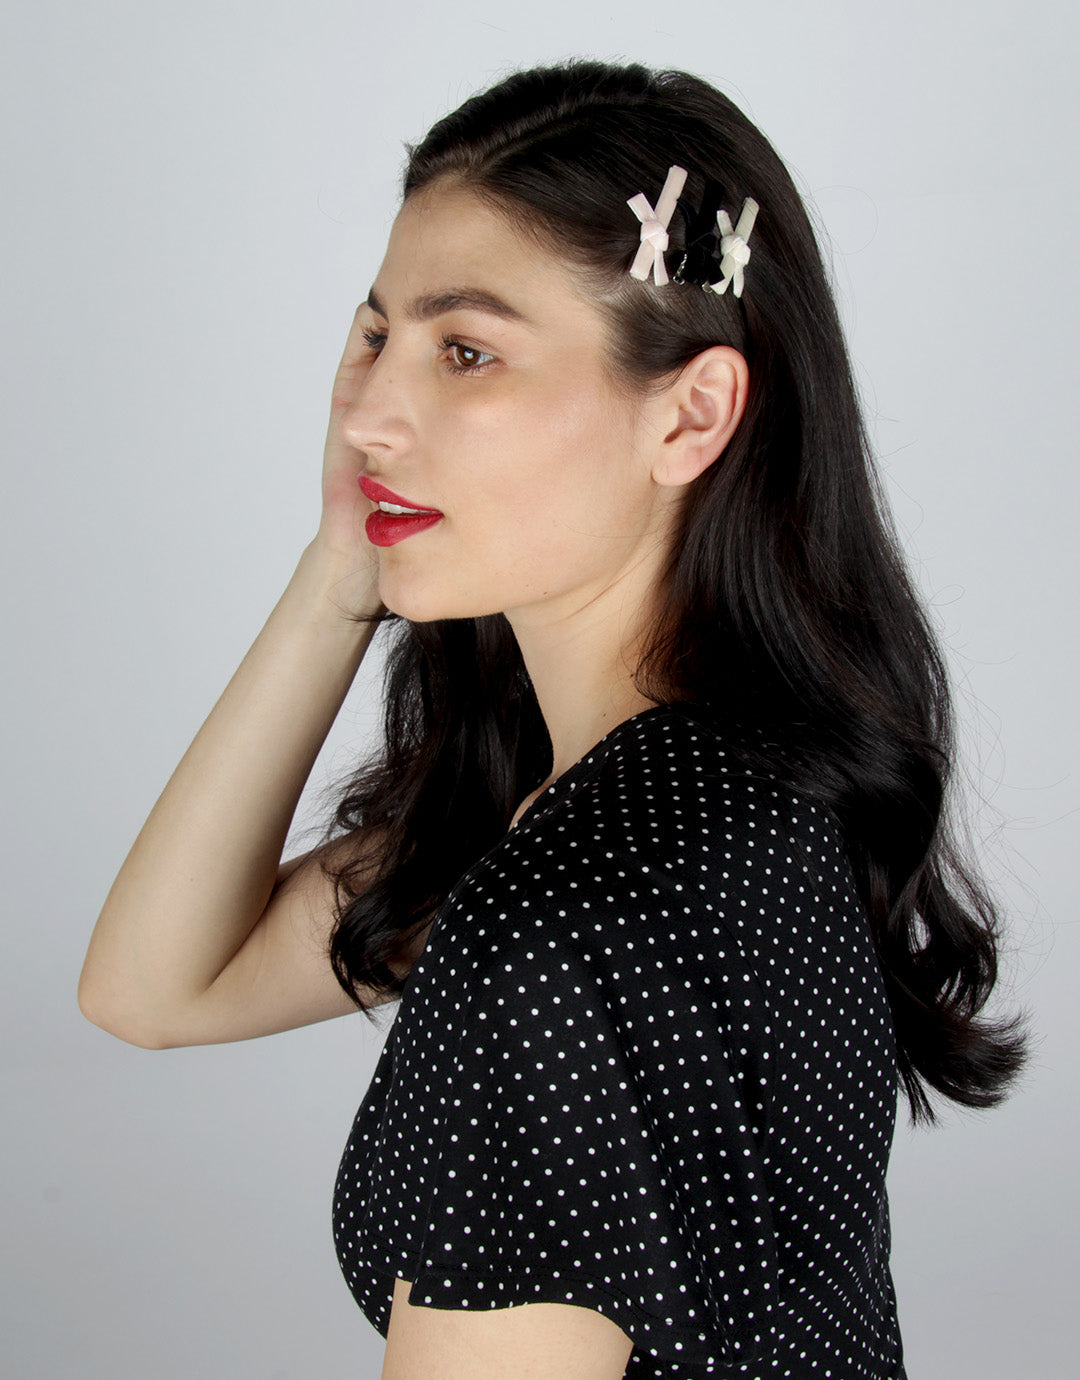 BANDED Women’s Premium Hair Accessories - Paris Chic - Petite Velvet Alligator Hair Clips